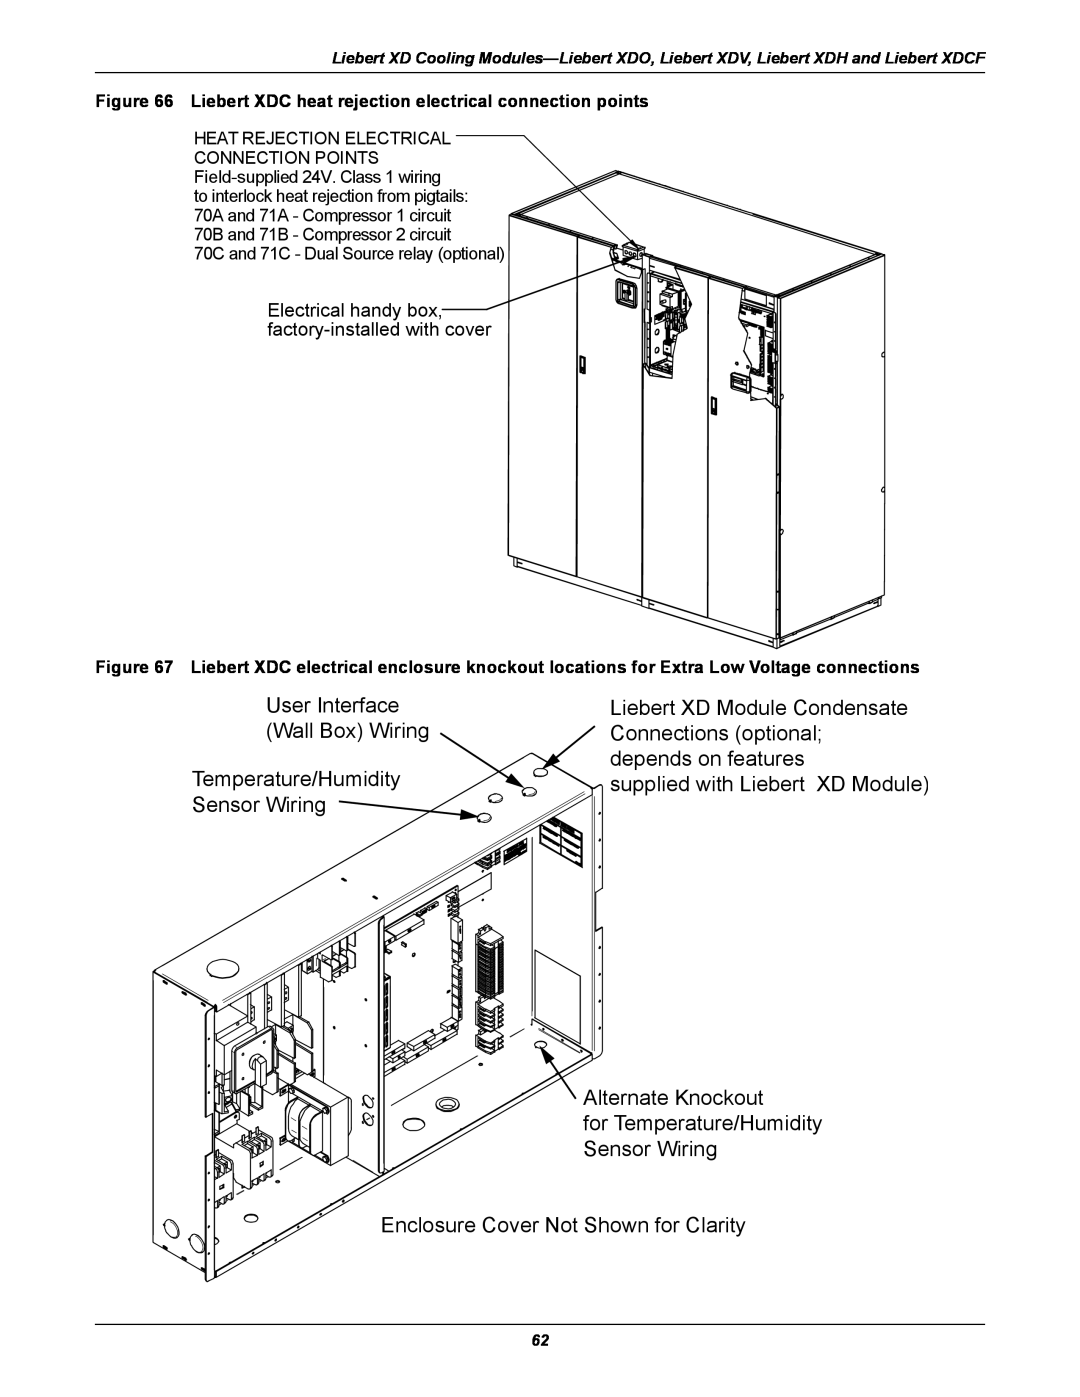 Emerson Xtreme Density manual User Interface Wall Box Wiring Temperature/Humidity Sensor Wiring 